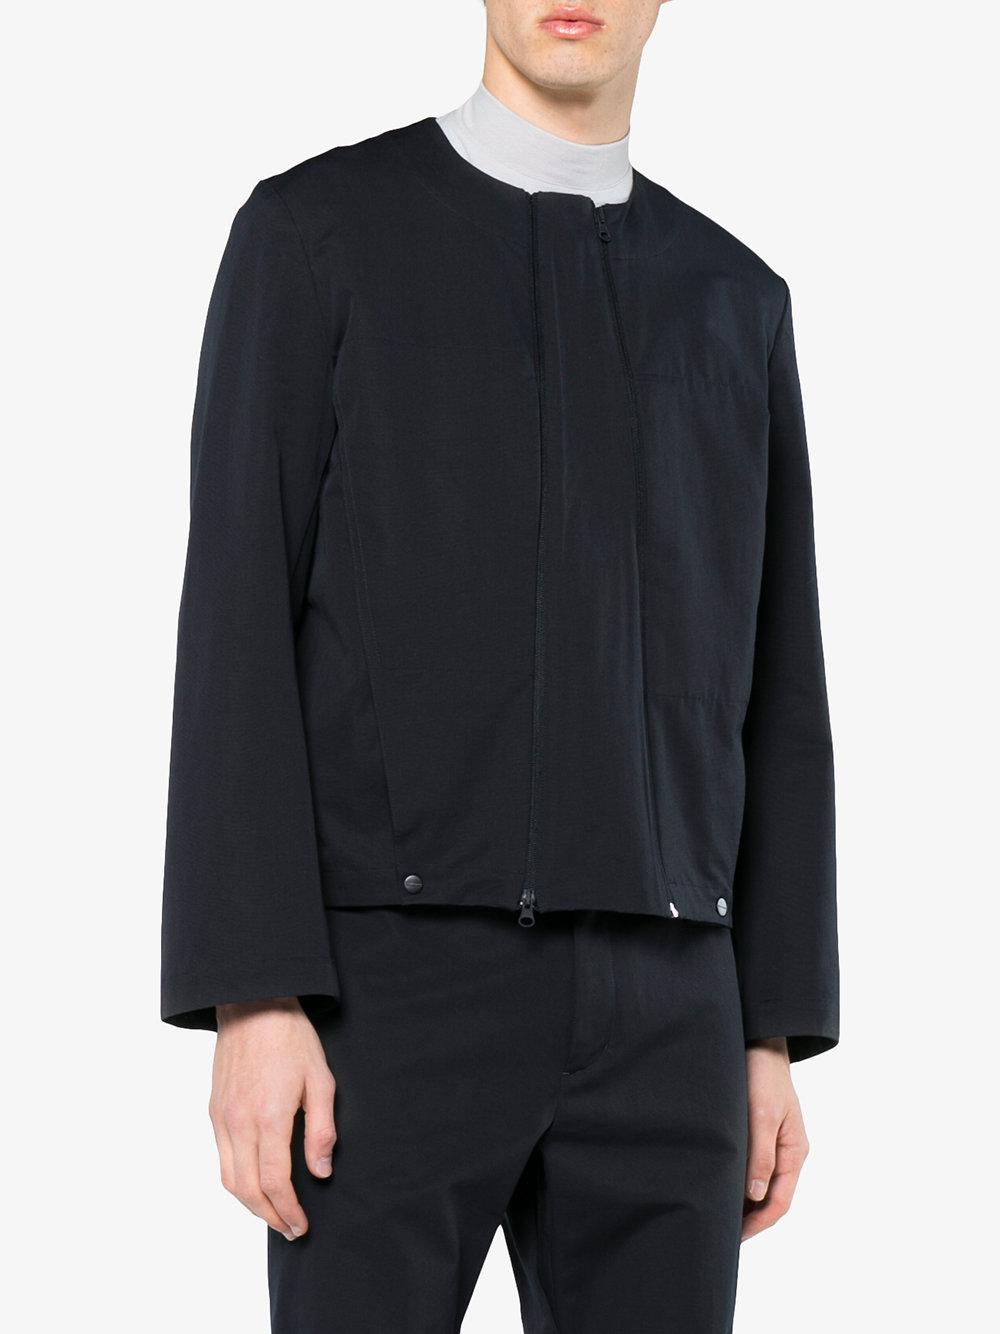 Kiko Kostadinov Cubist Cotton Jacket With Zip in Gray for Men | Lyst